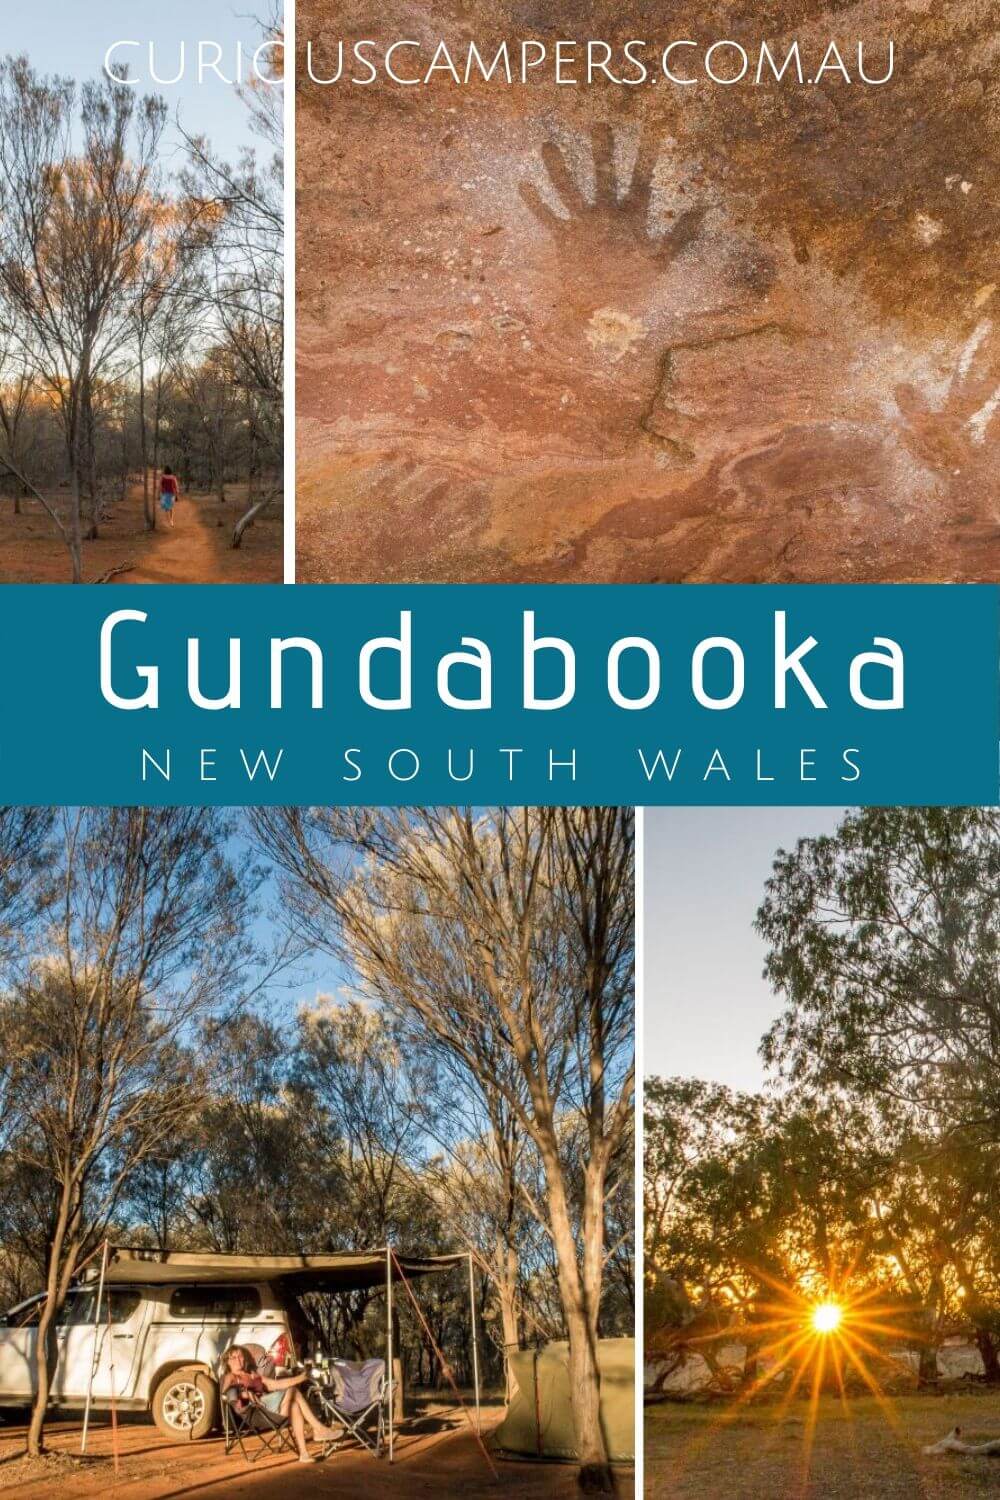 Gundabooka National Park